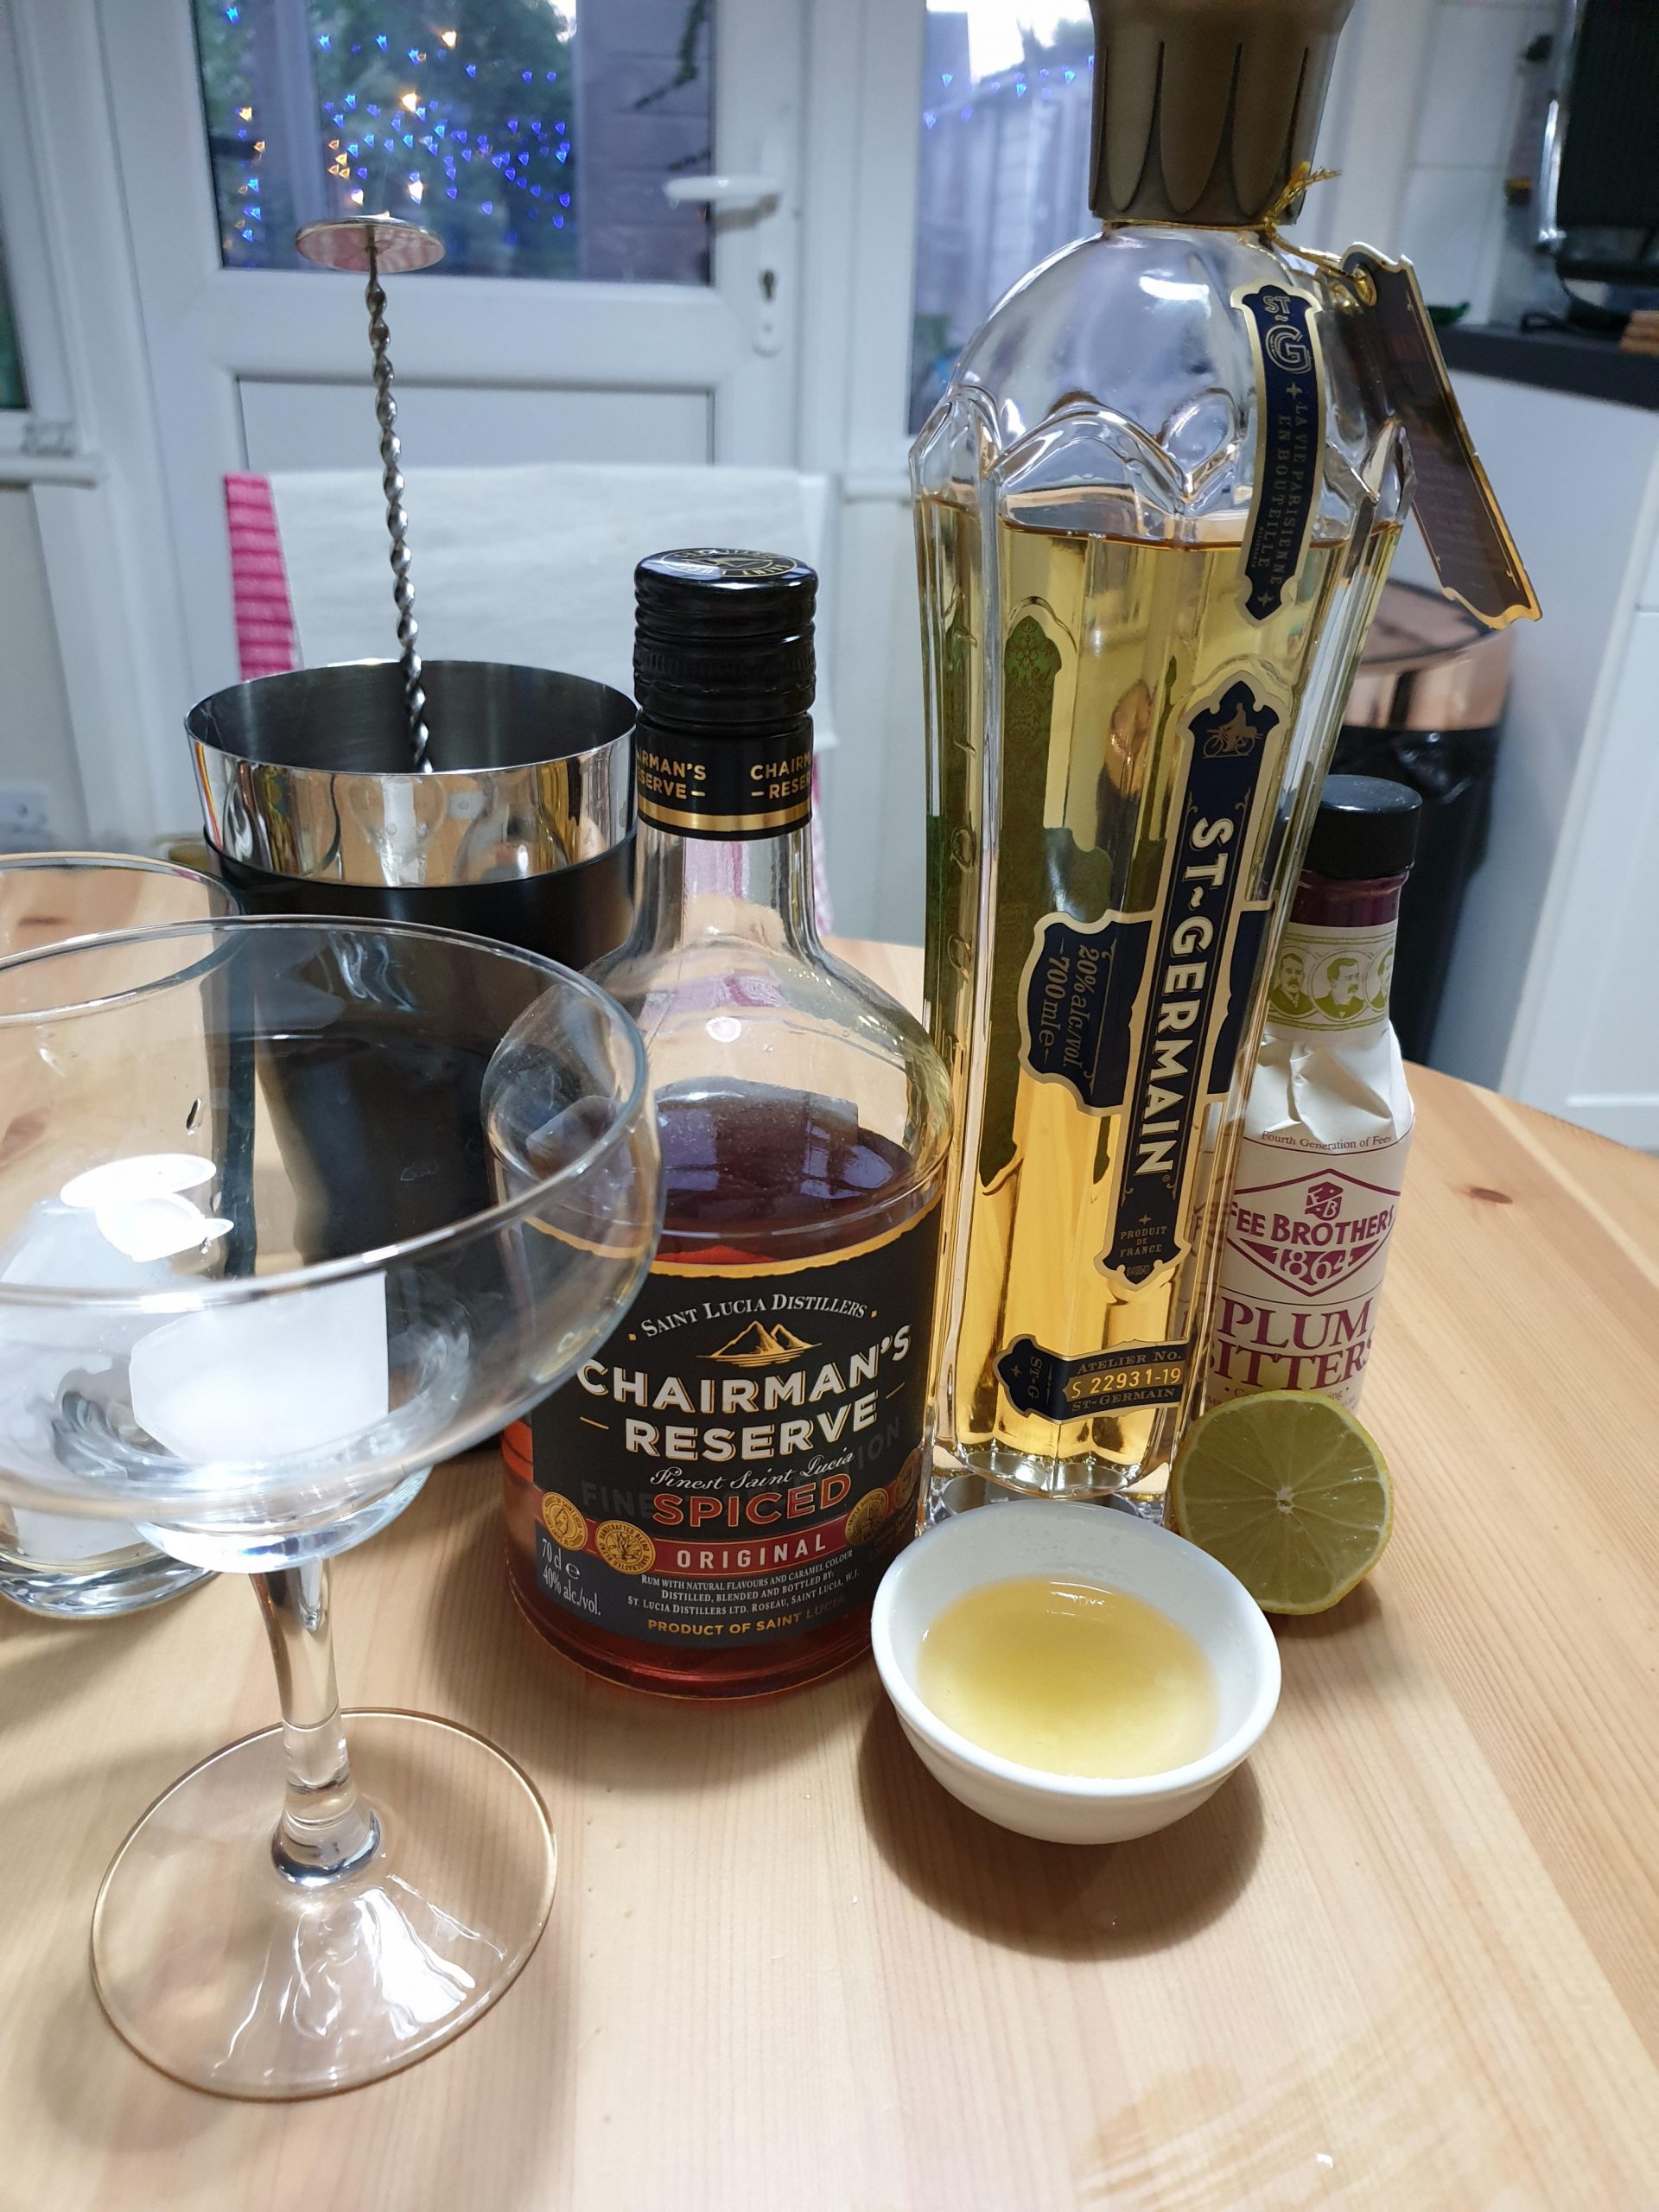 Spiced rum cocktail : rum